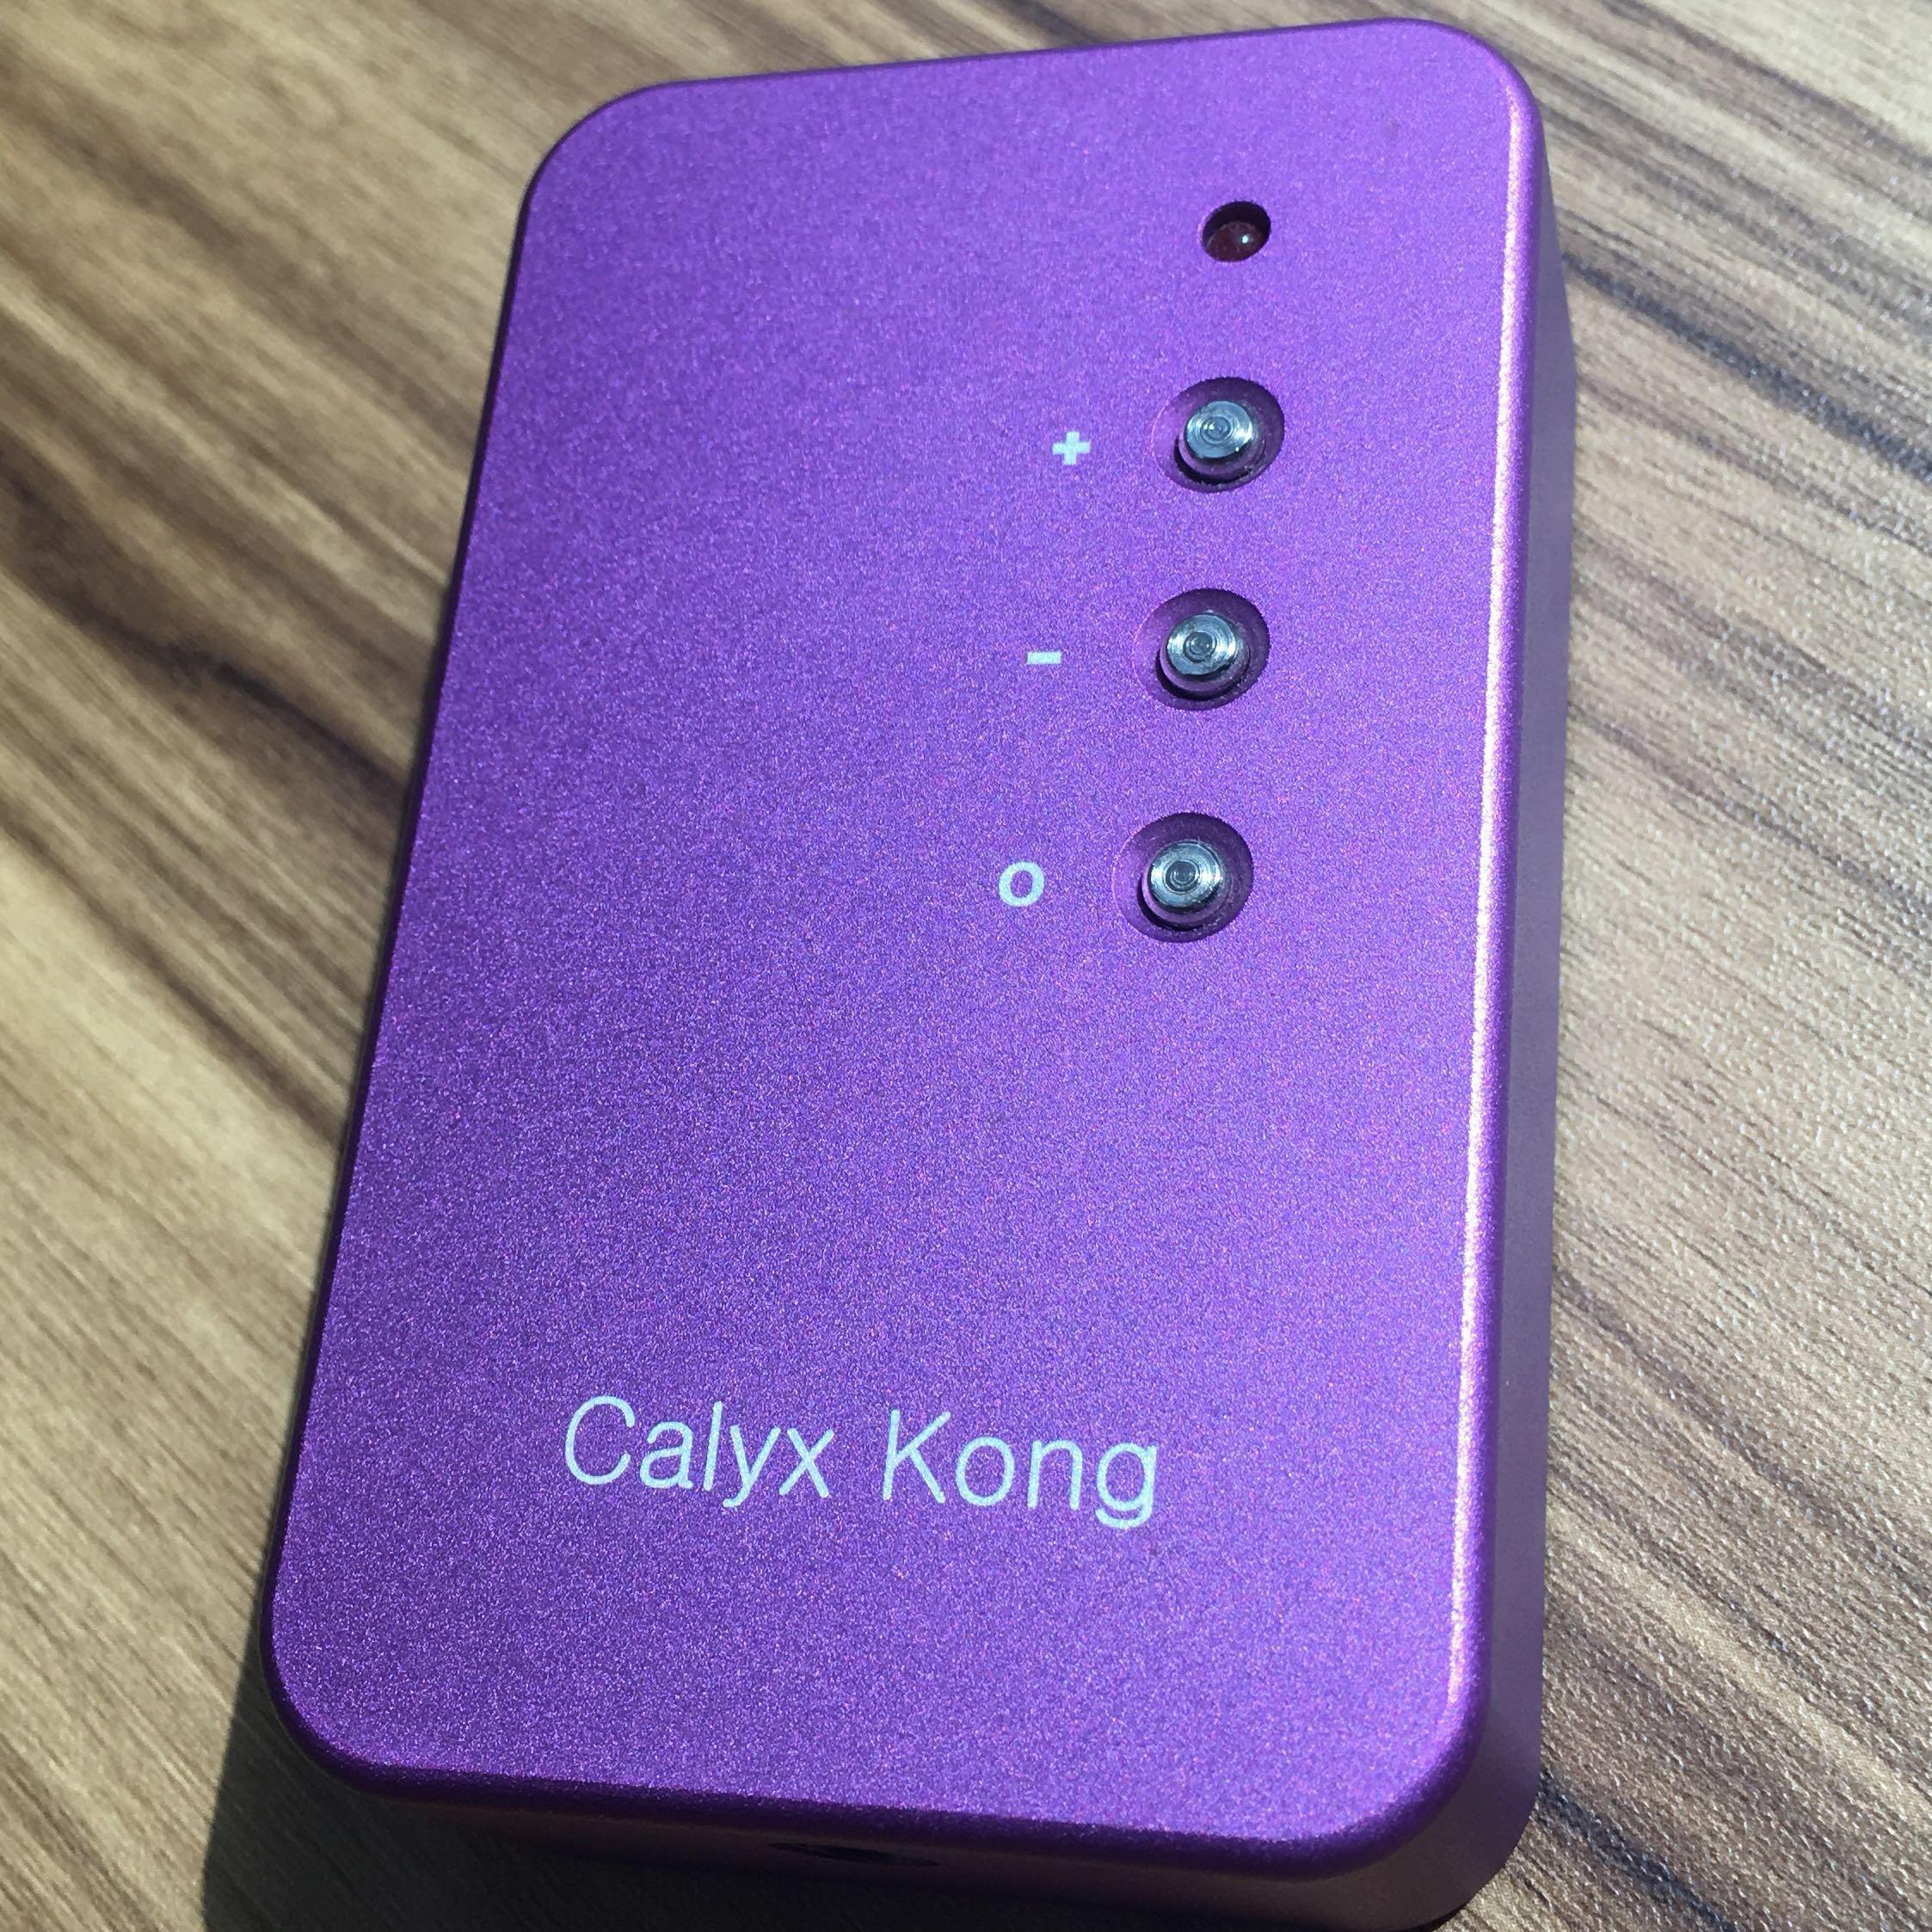 Calyx Kong USB DAC and Headphone Amp